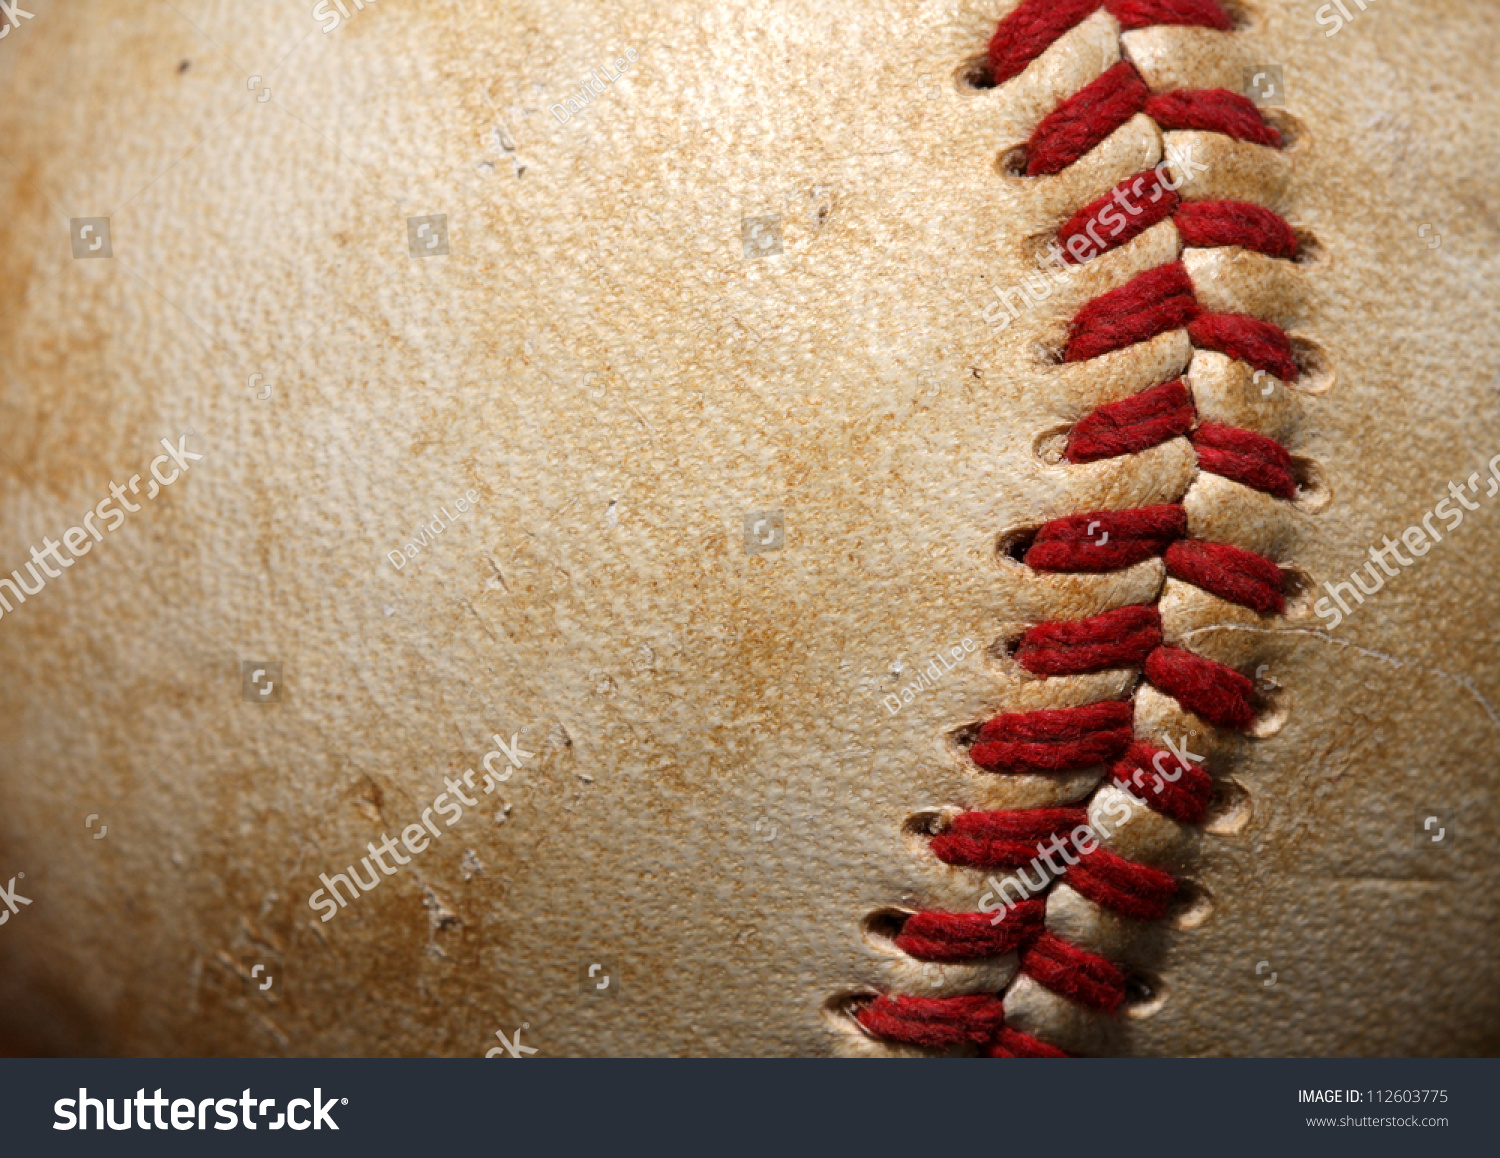 powerpoint-template-close-up-of-a-baseball-iijnhkoom